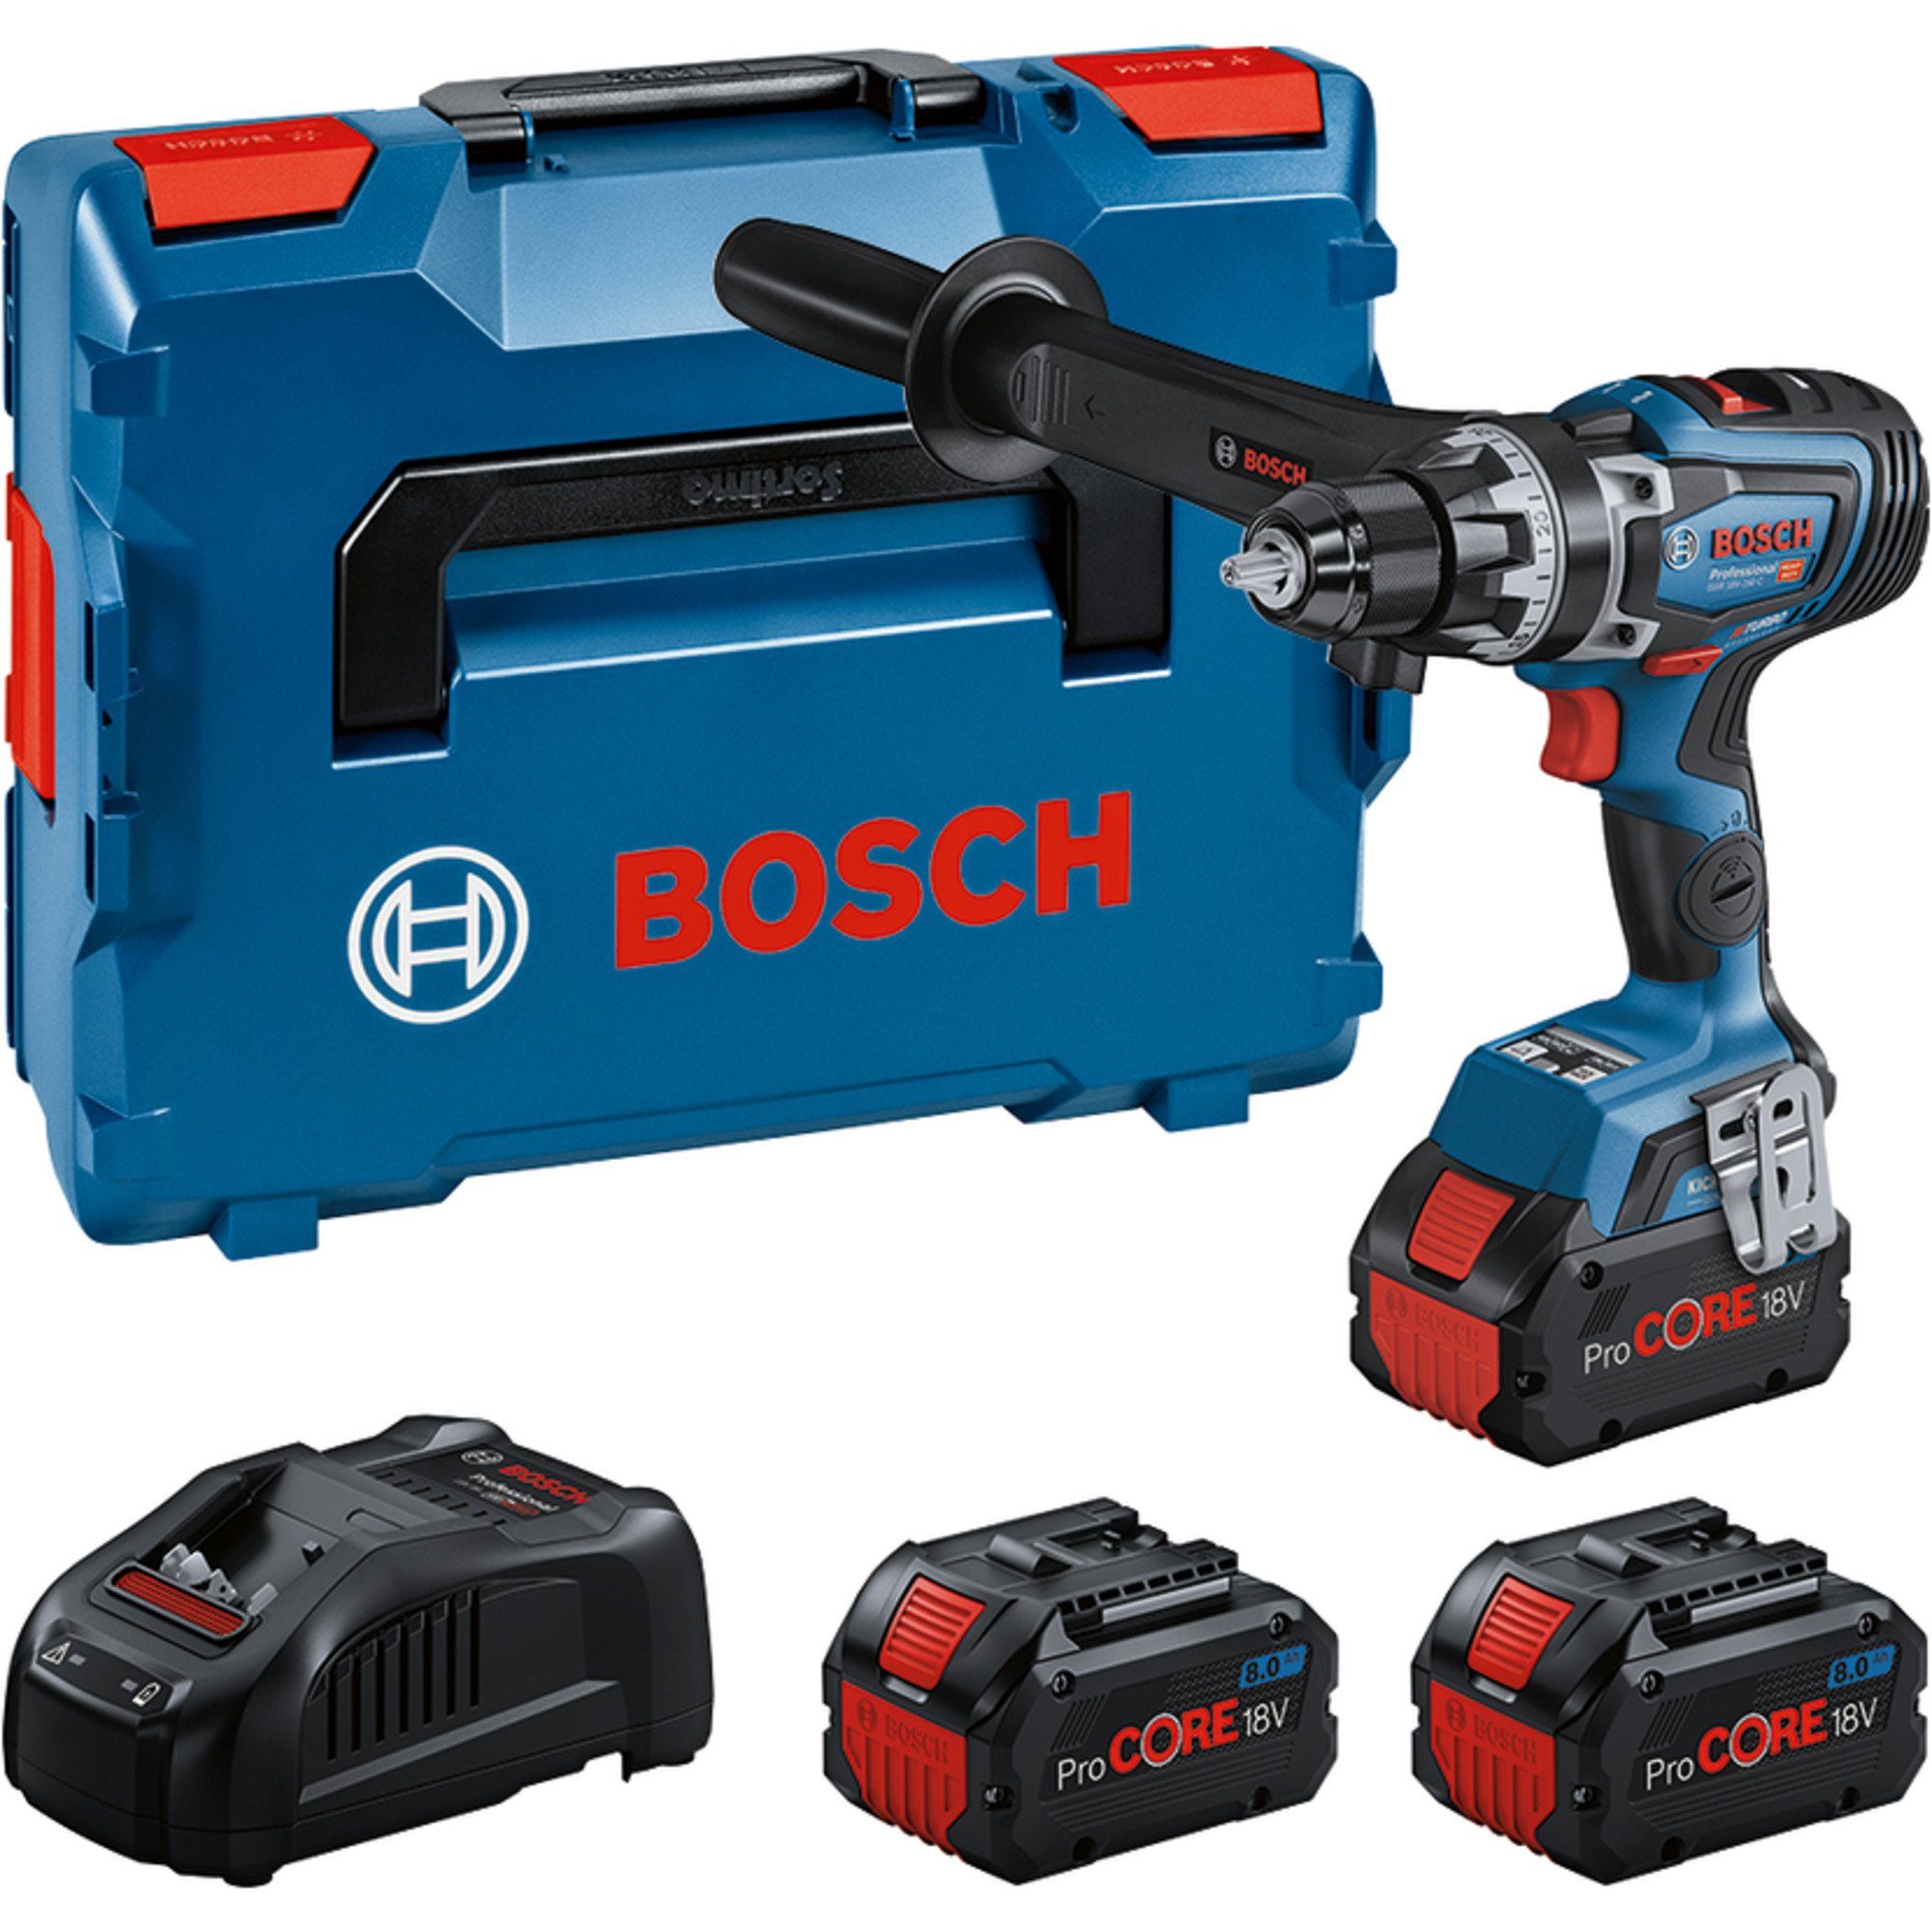 BOSCH Akku-Bohrschrauber Bosch Professional Akku-Bohrschrauber BITURBO GSR,  Werkzeug-Aufnahme: Schnellspann-Bohrfutter